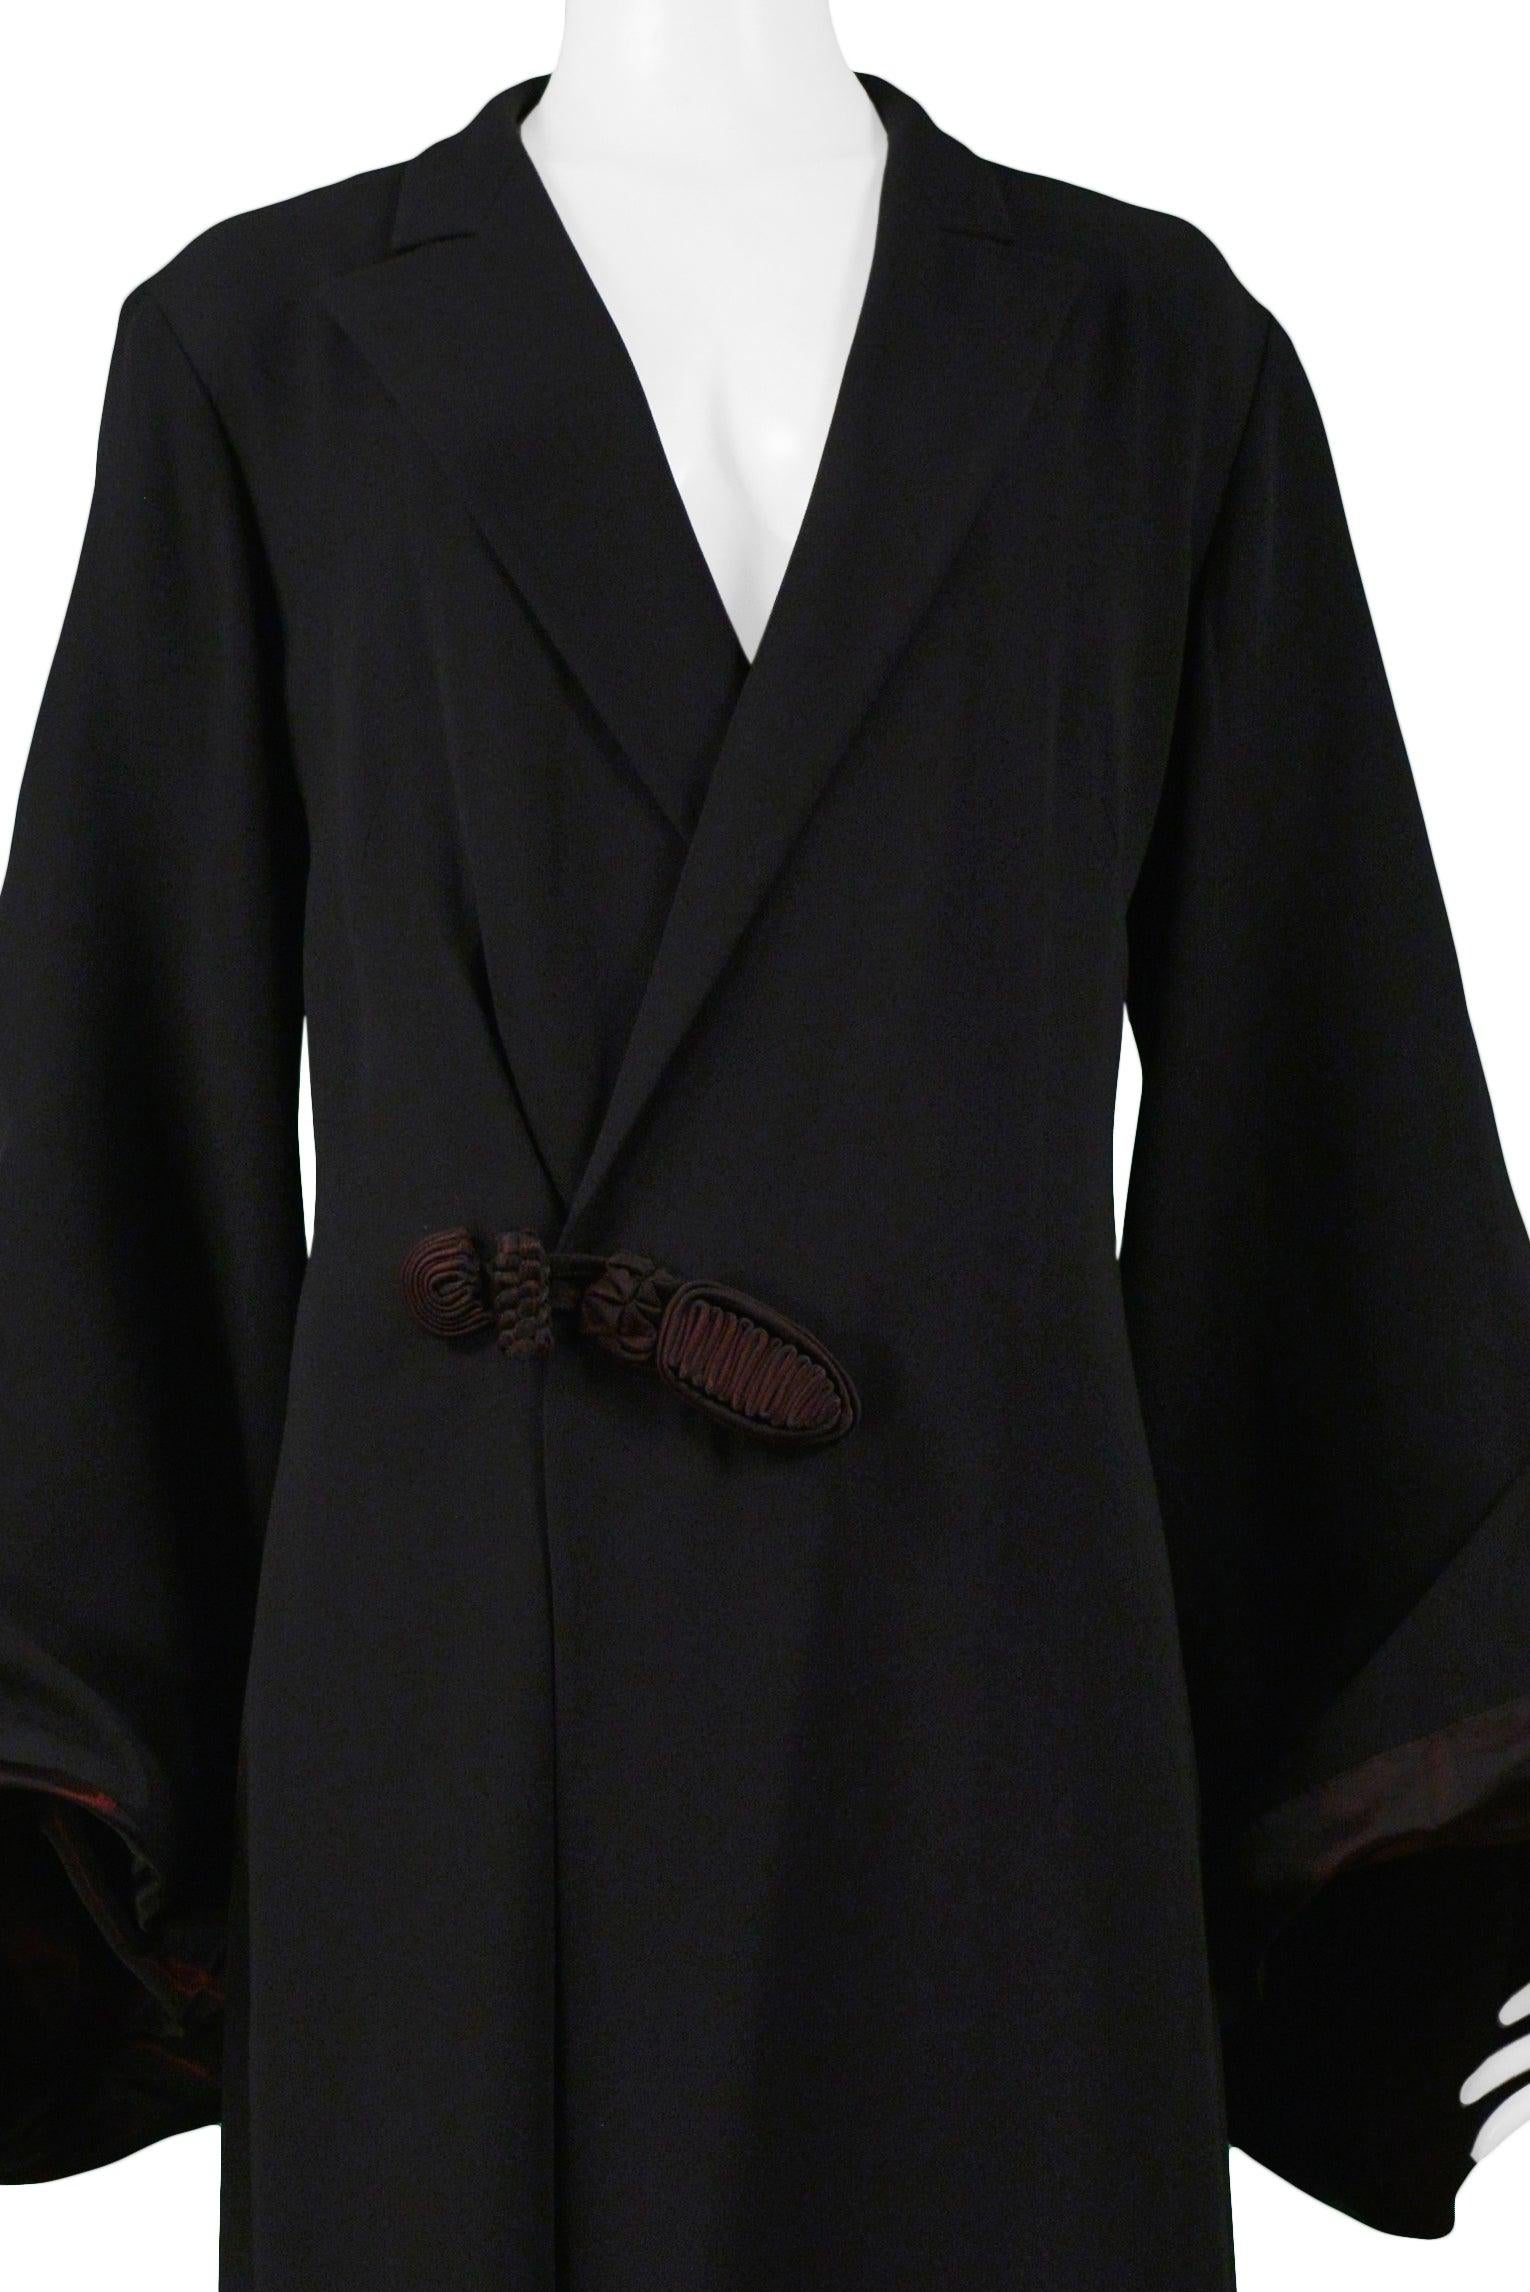 jean paul gaultier kimono